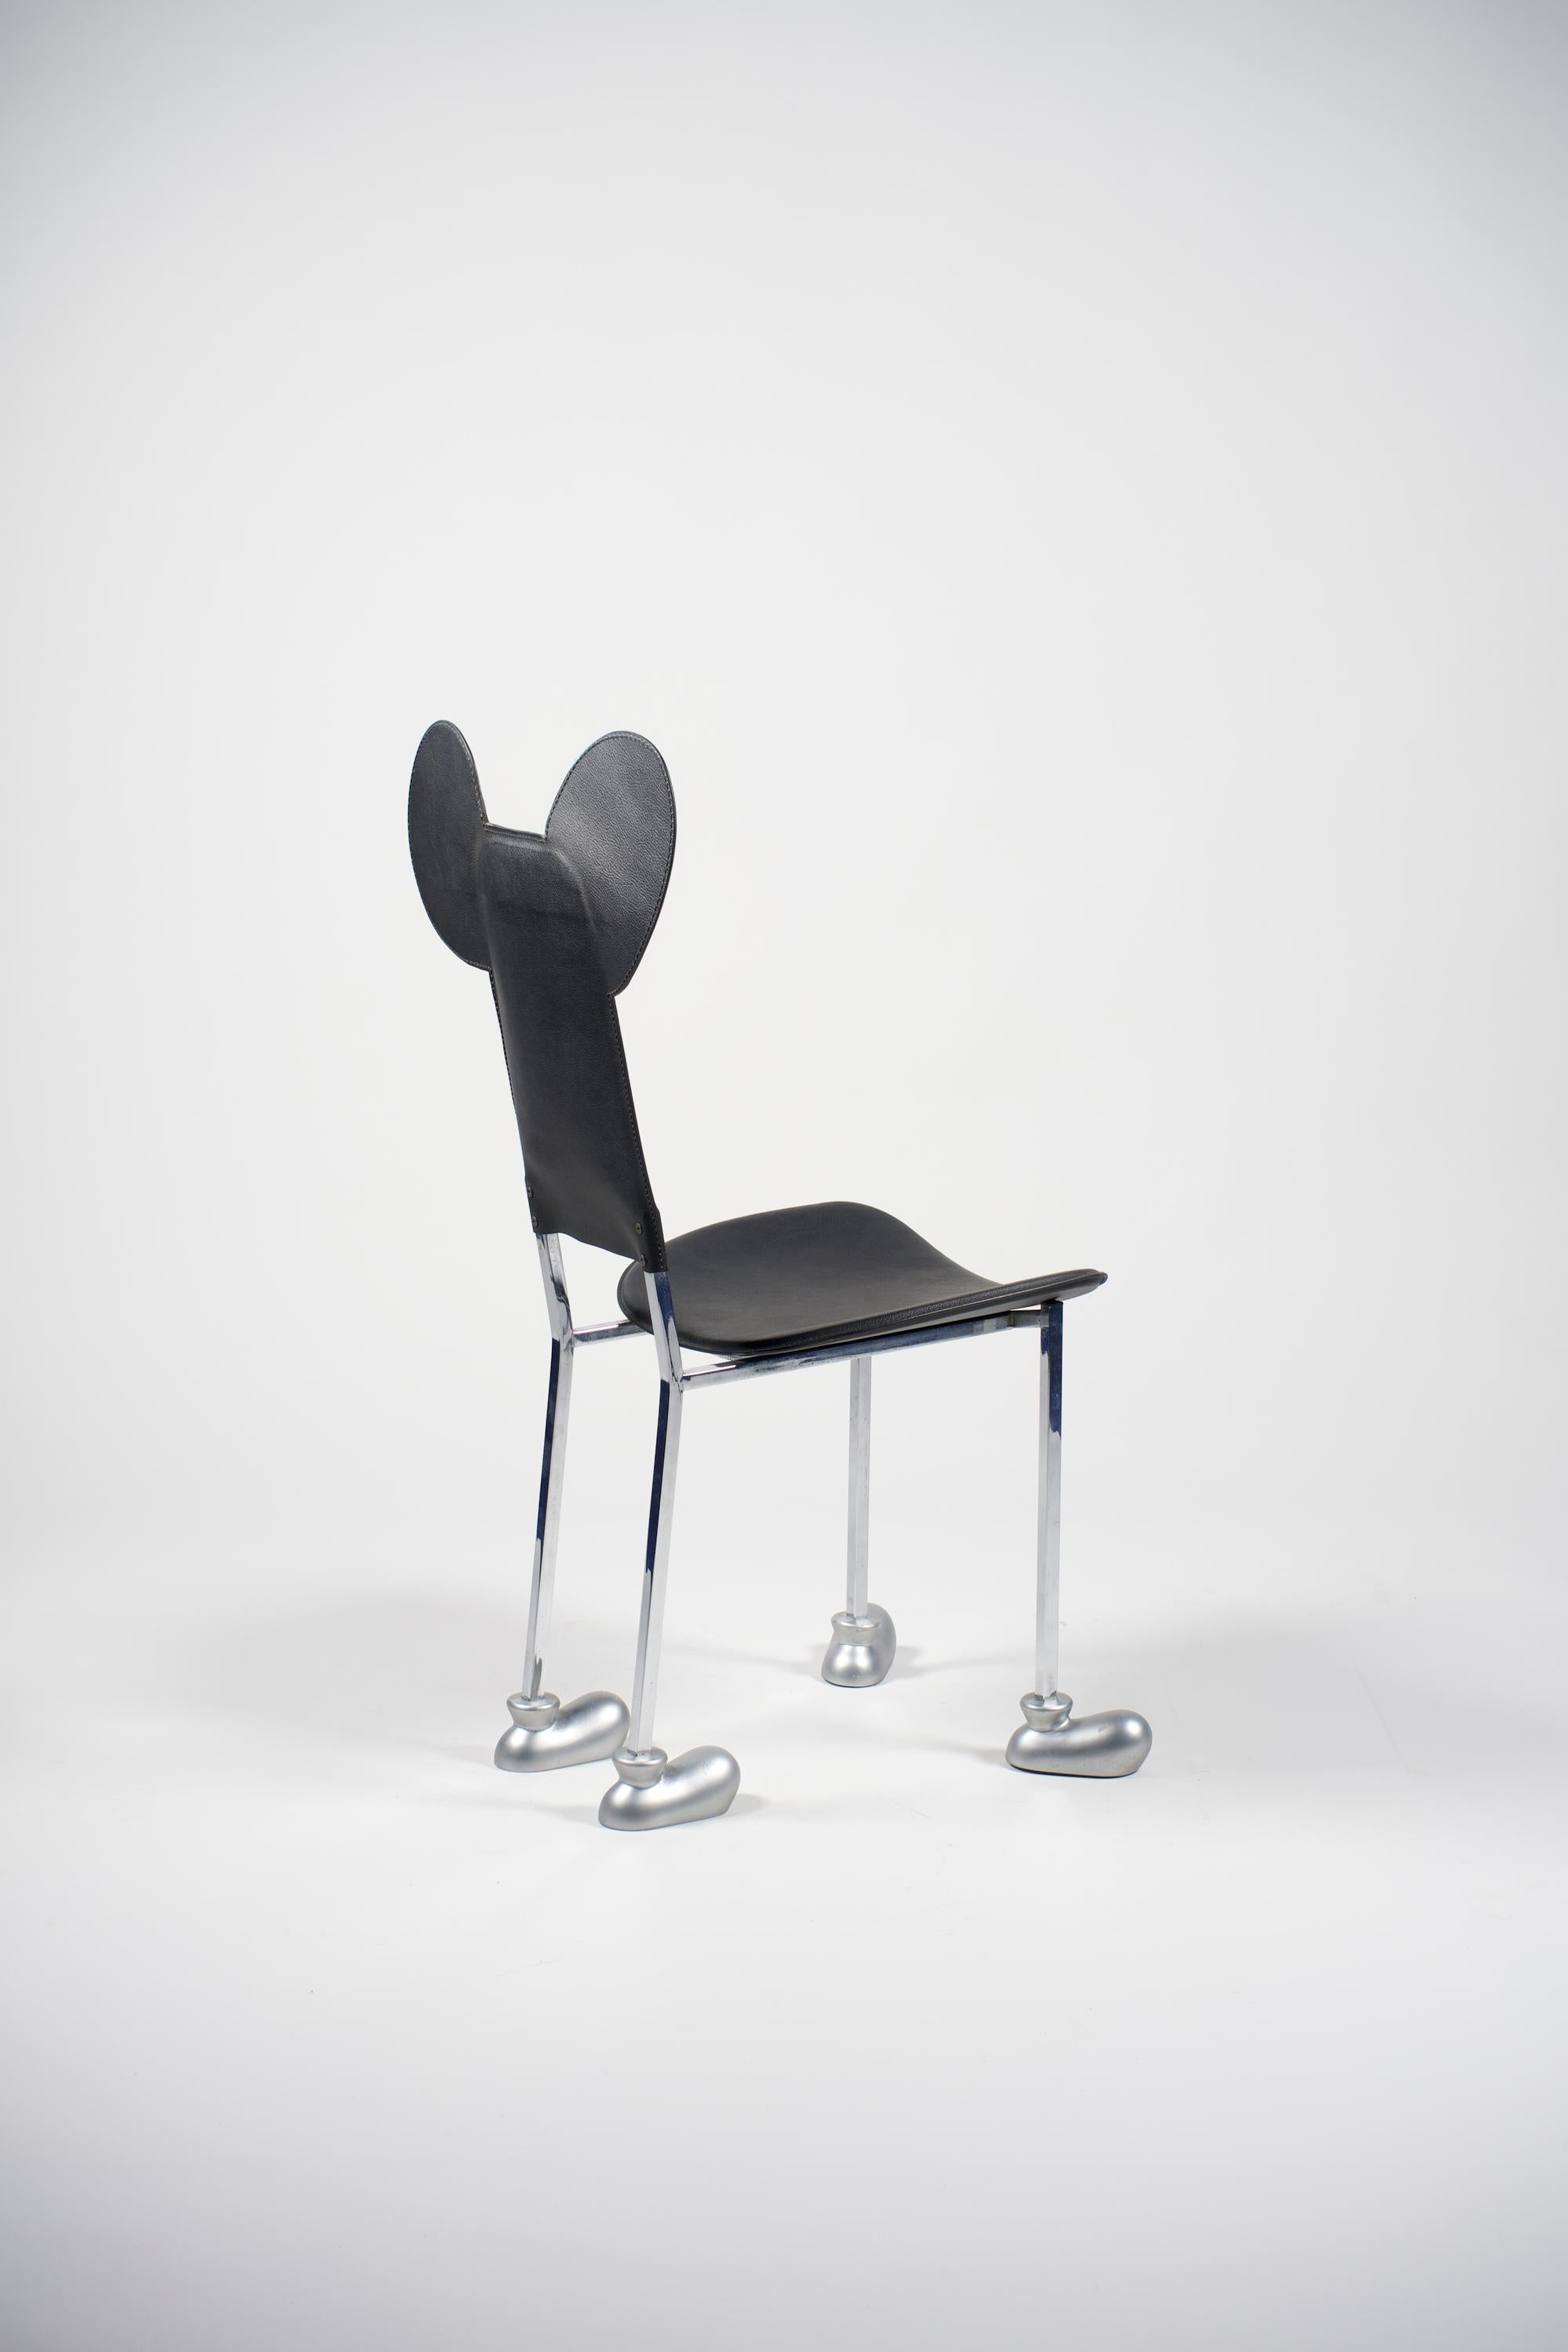 Spanish Memphis Chair by Javier Mariscal ''Garriris'', Black Leather, 1897 For Sale